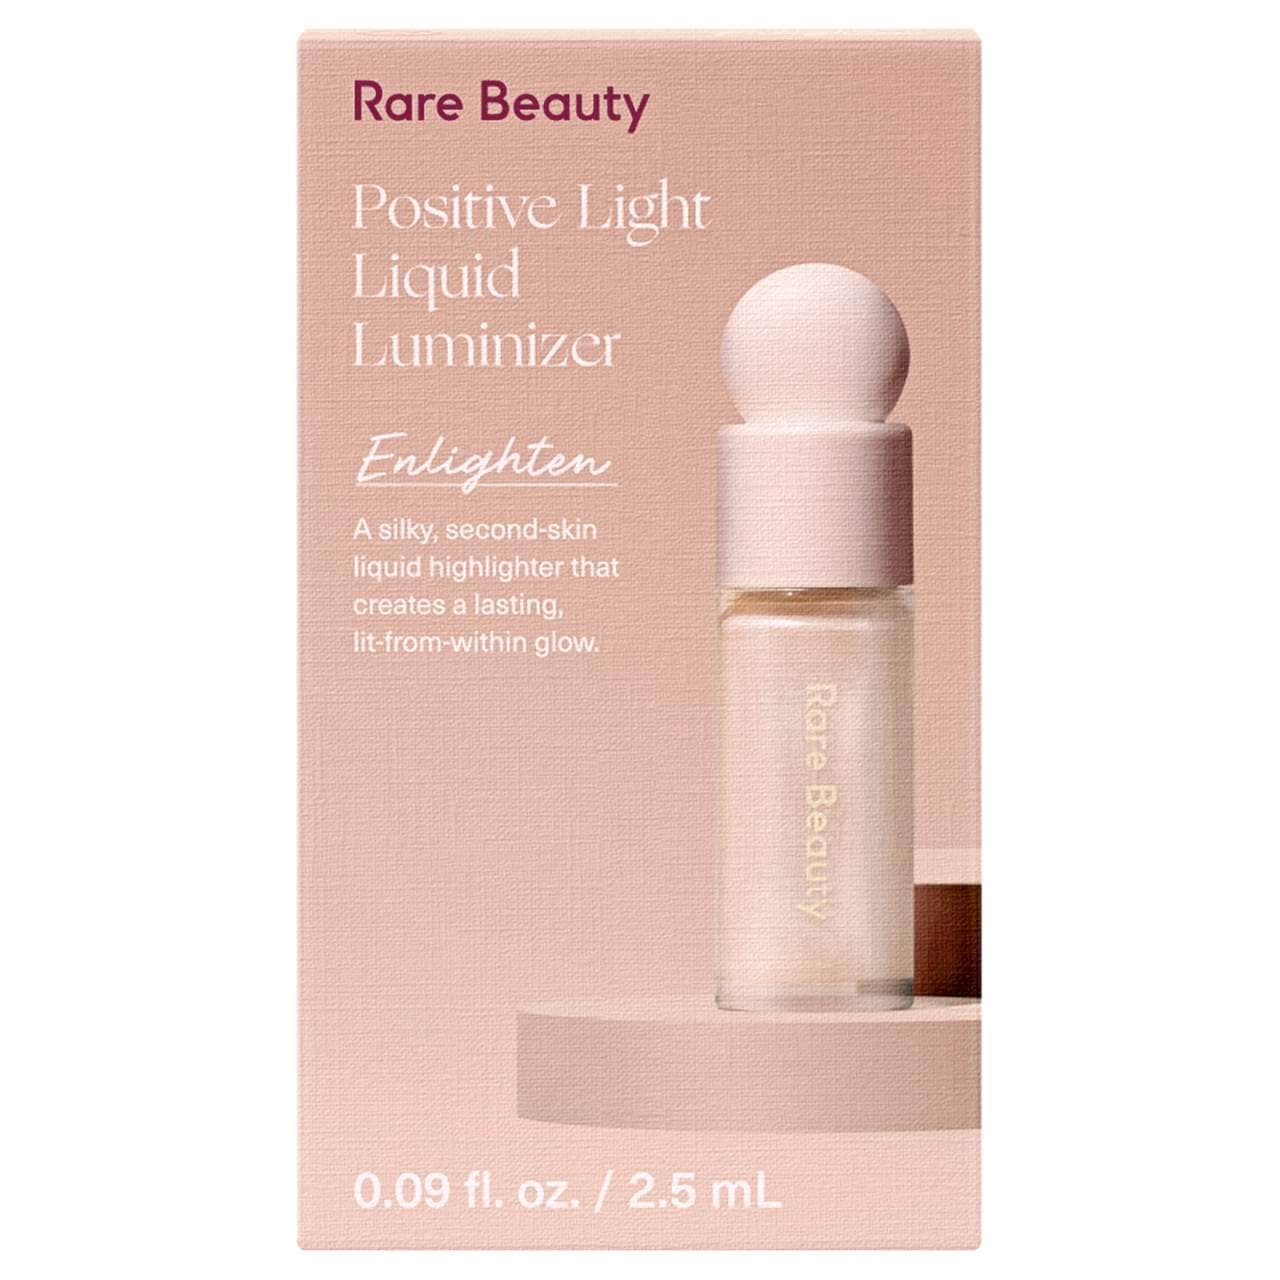 Rare Beauty by Selena Gomez | Mini Positive Light Liquid Luminizer Highlight | Enlighten